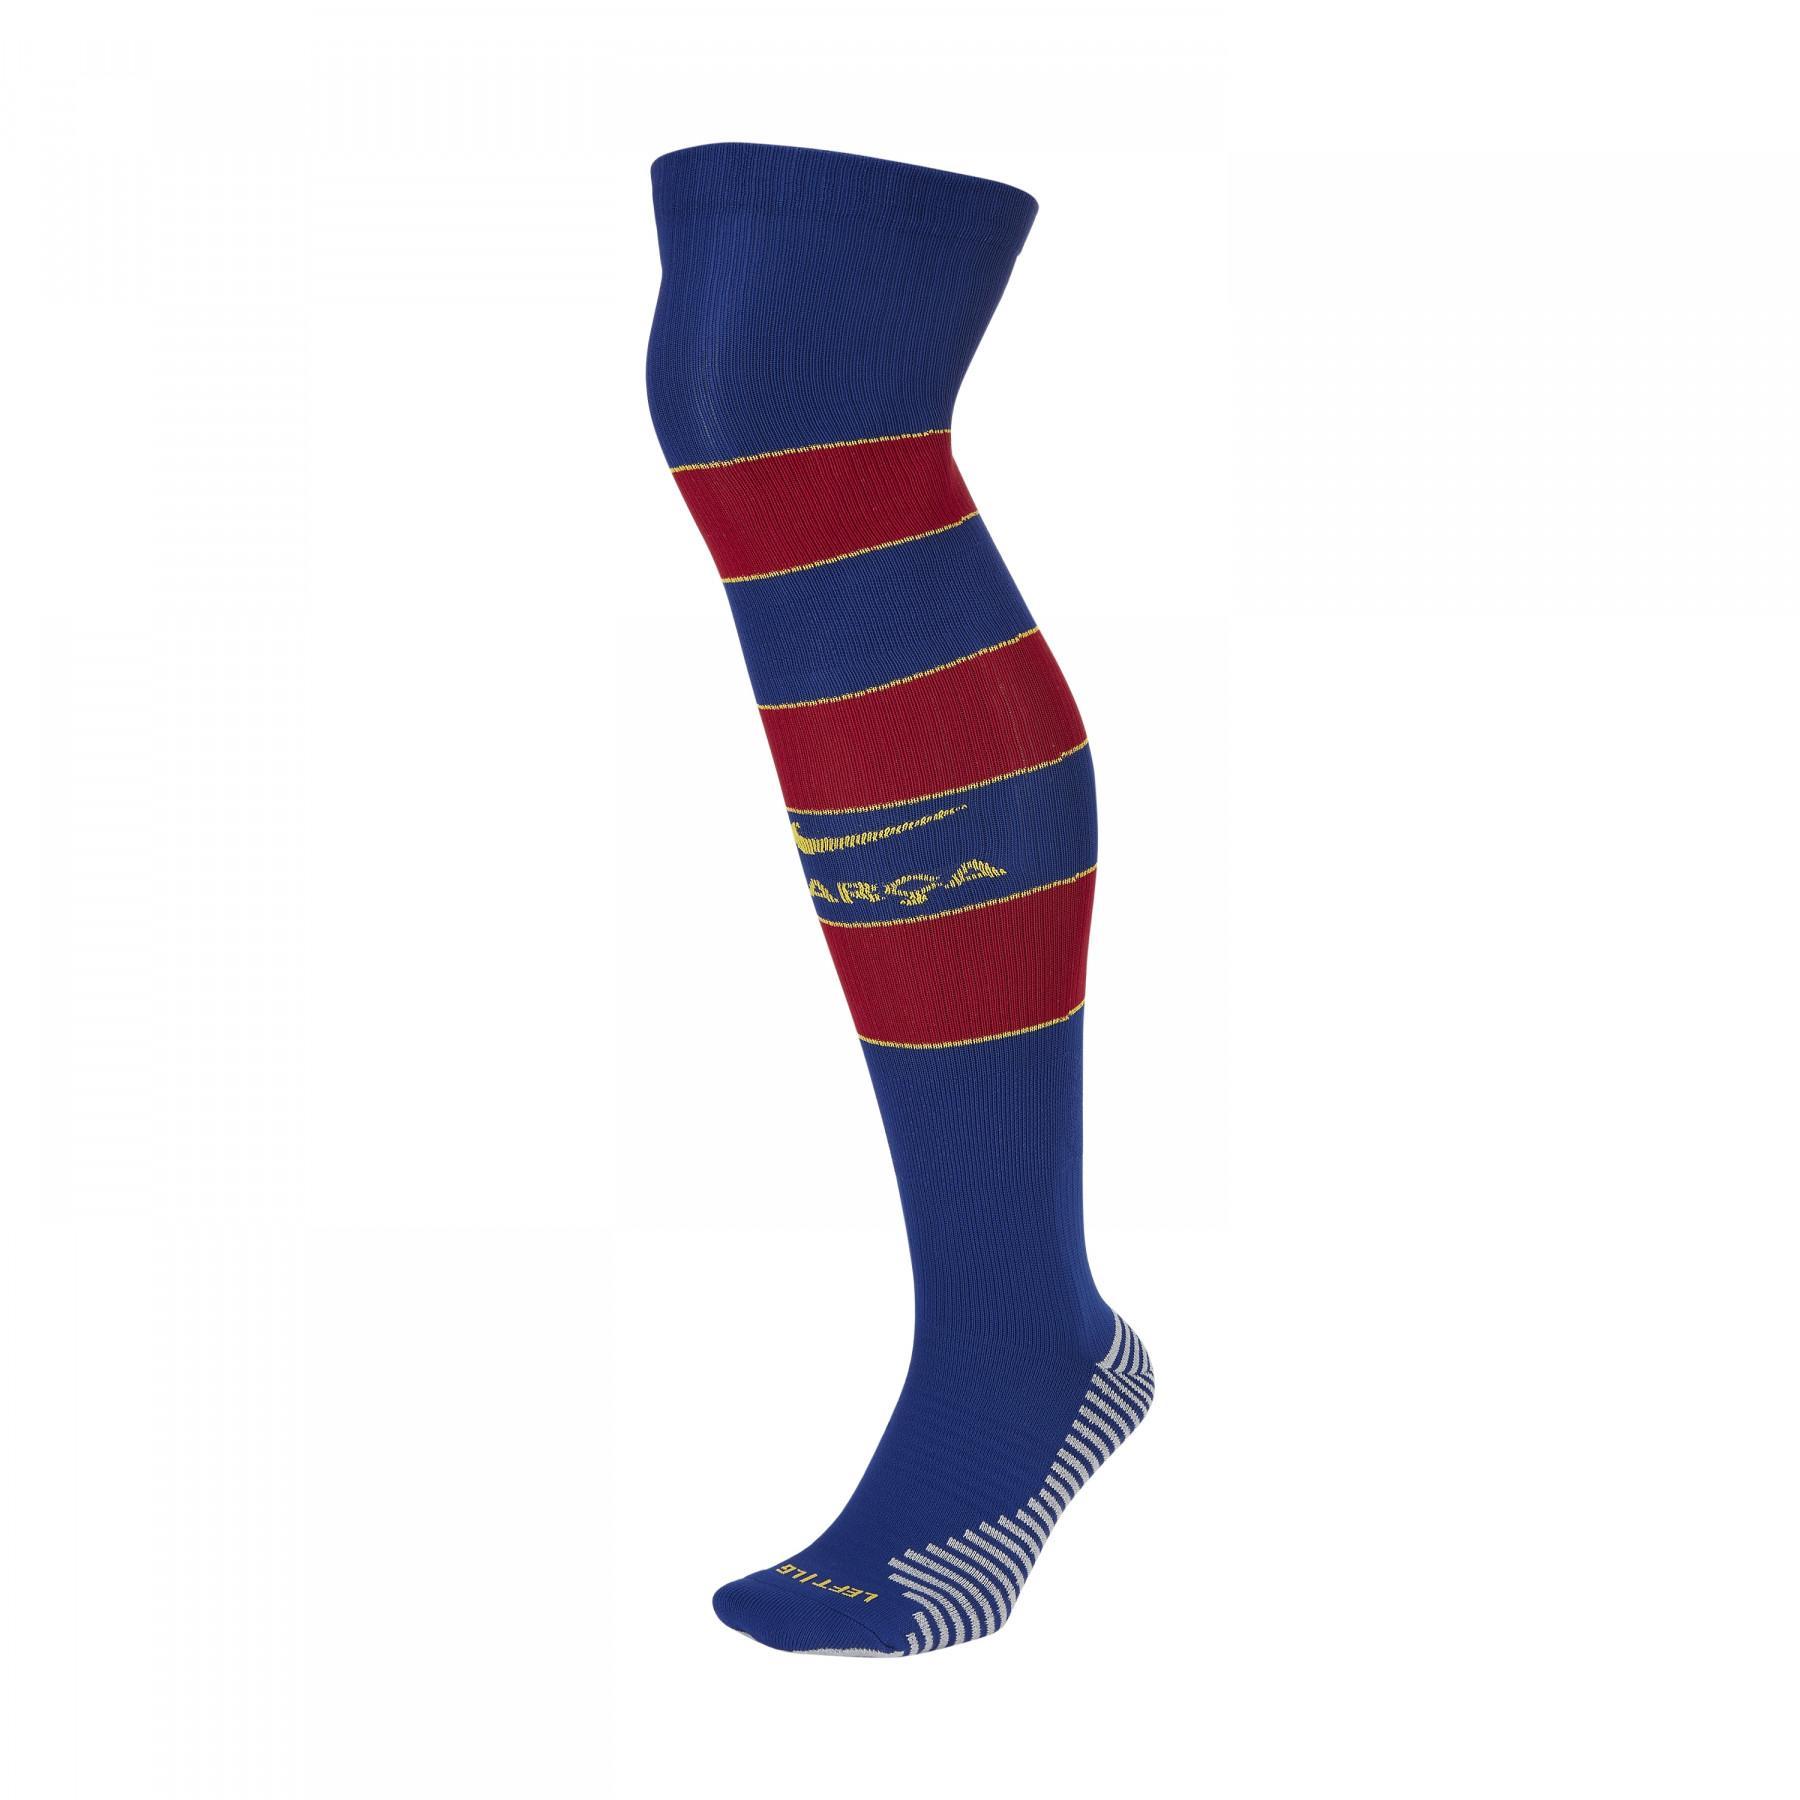 Barcelona home socks 2020/21 